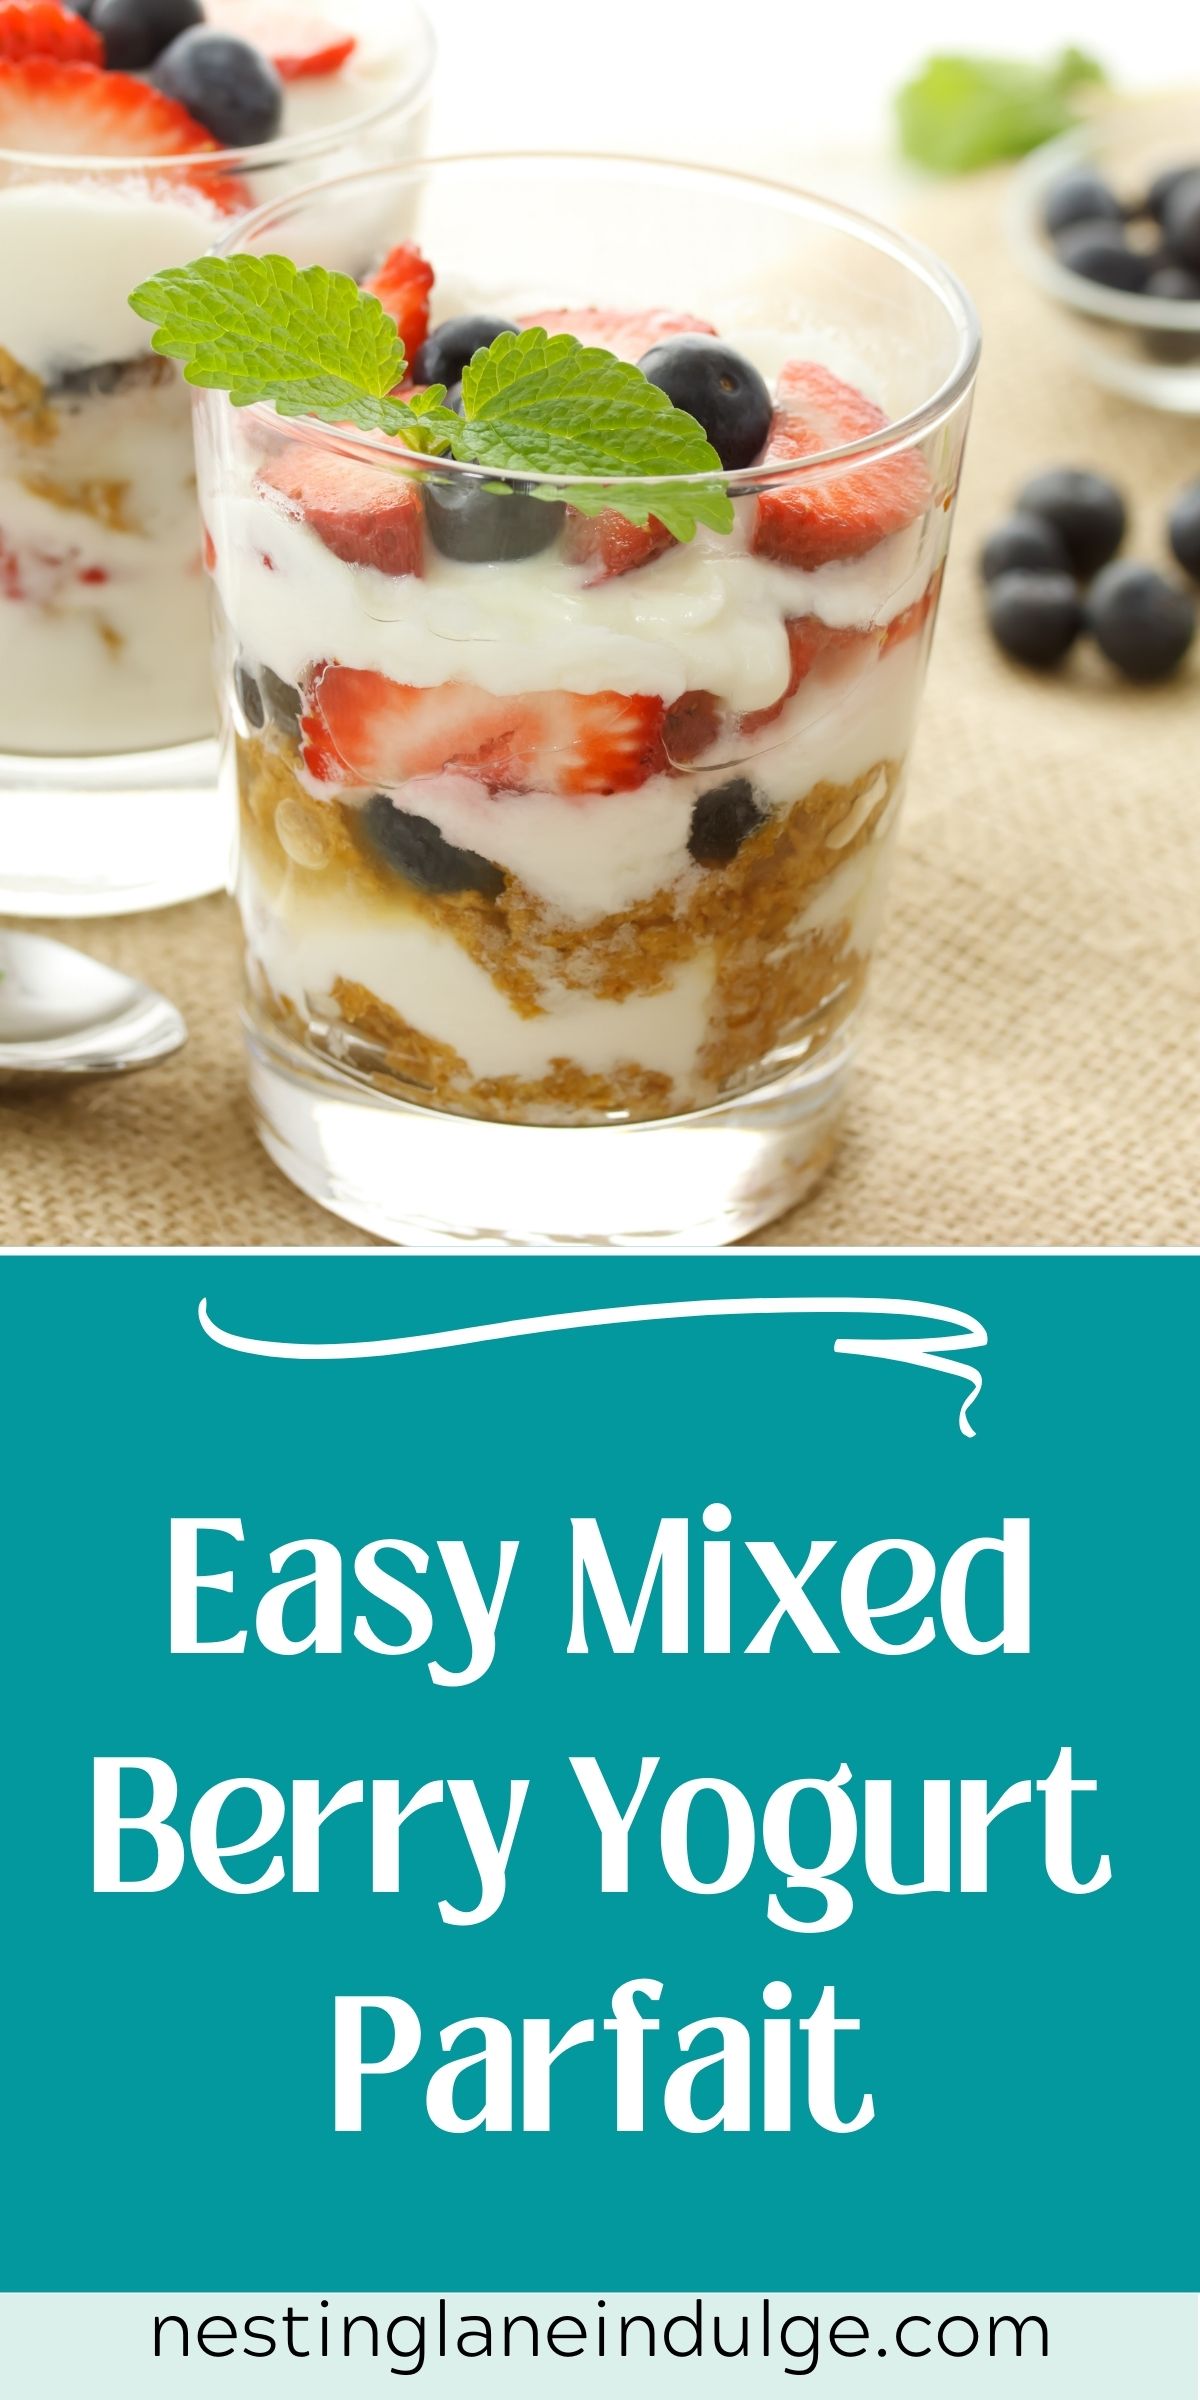 Graphic for Pinterest of Easy Mixed Berry Yogurt Parfait Recipe.